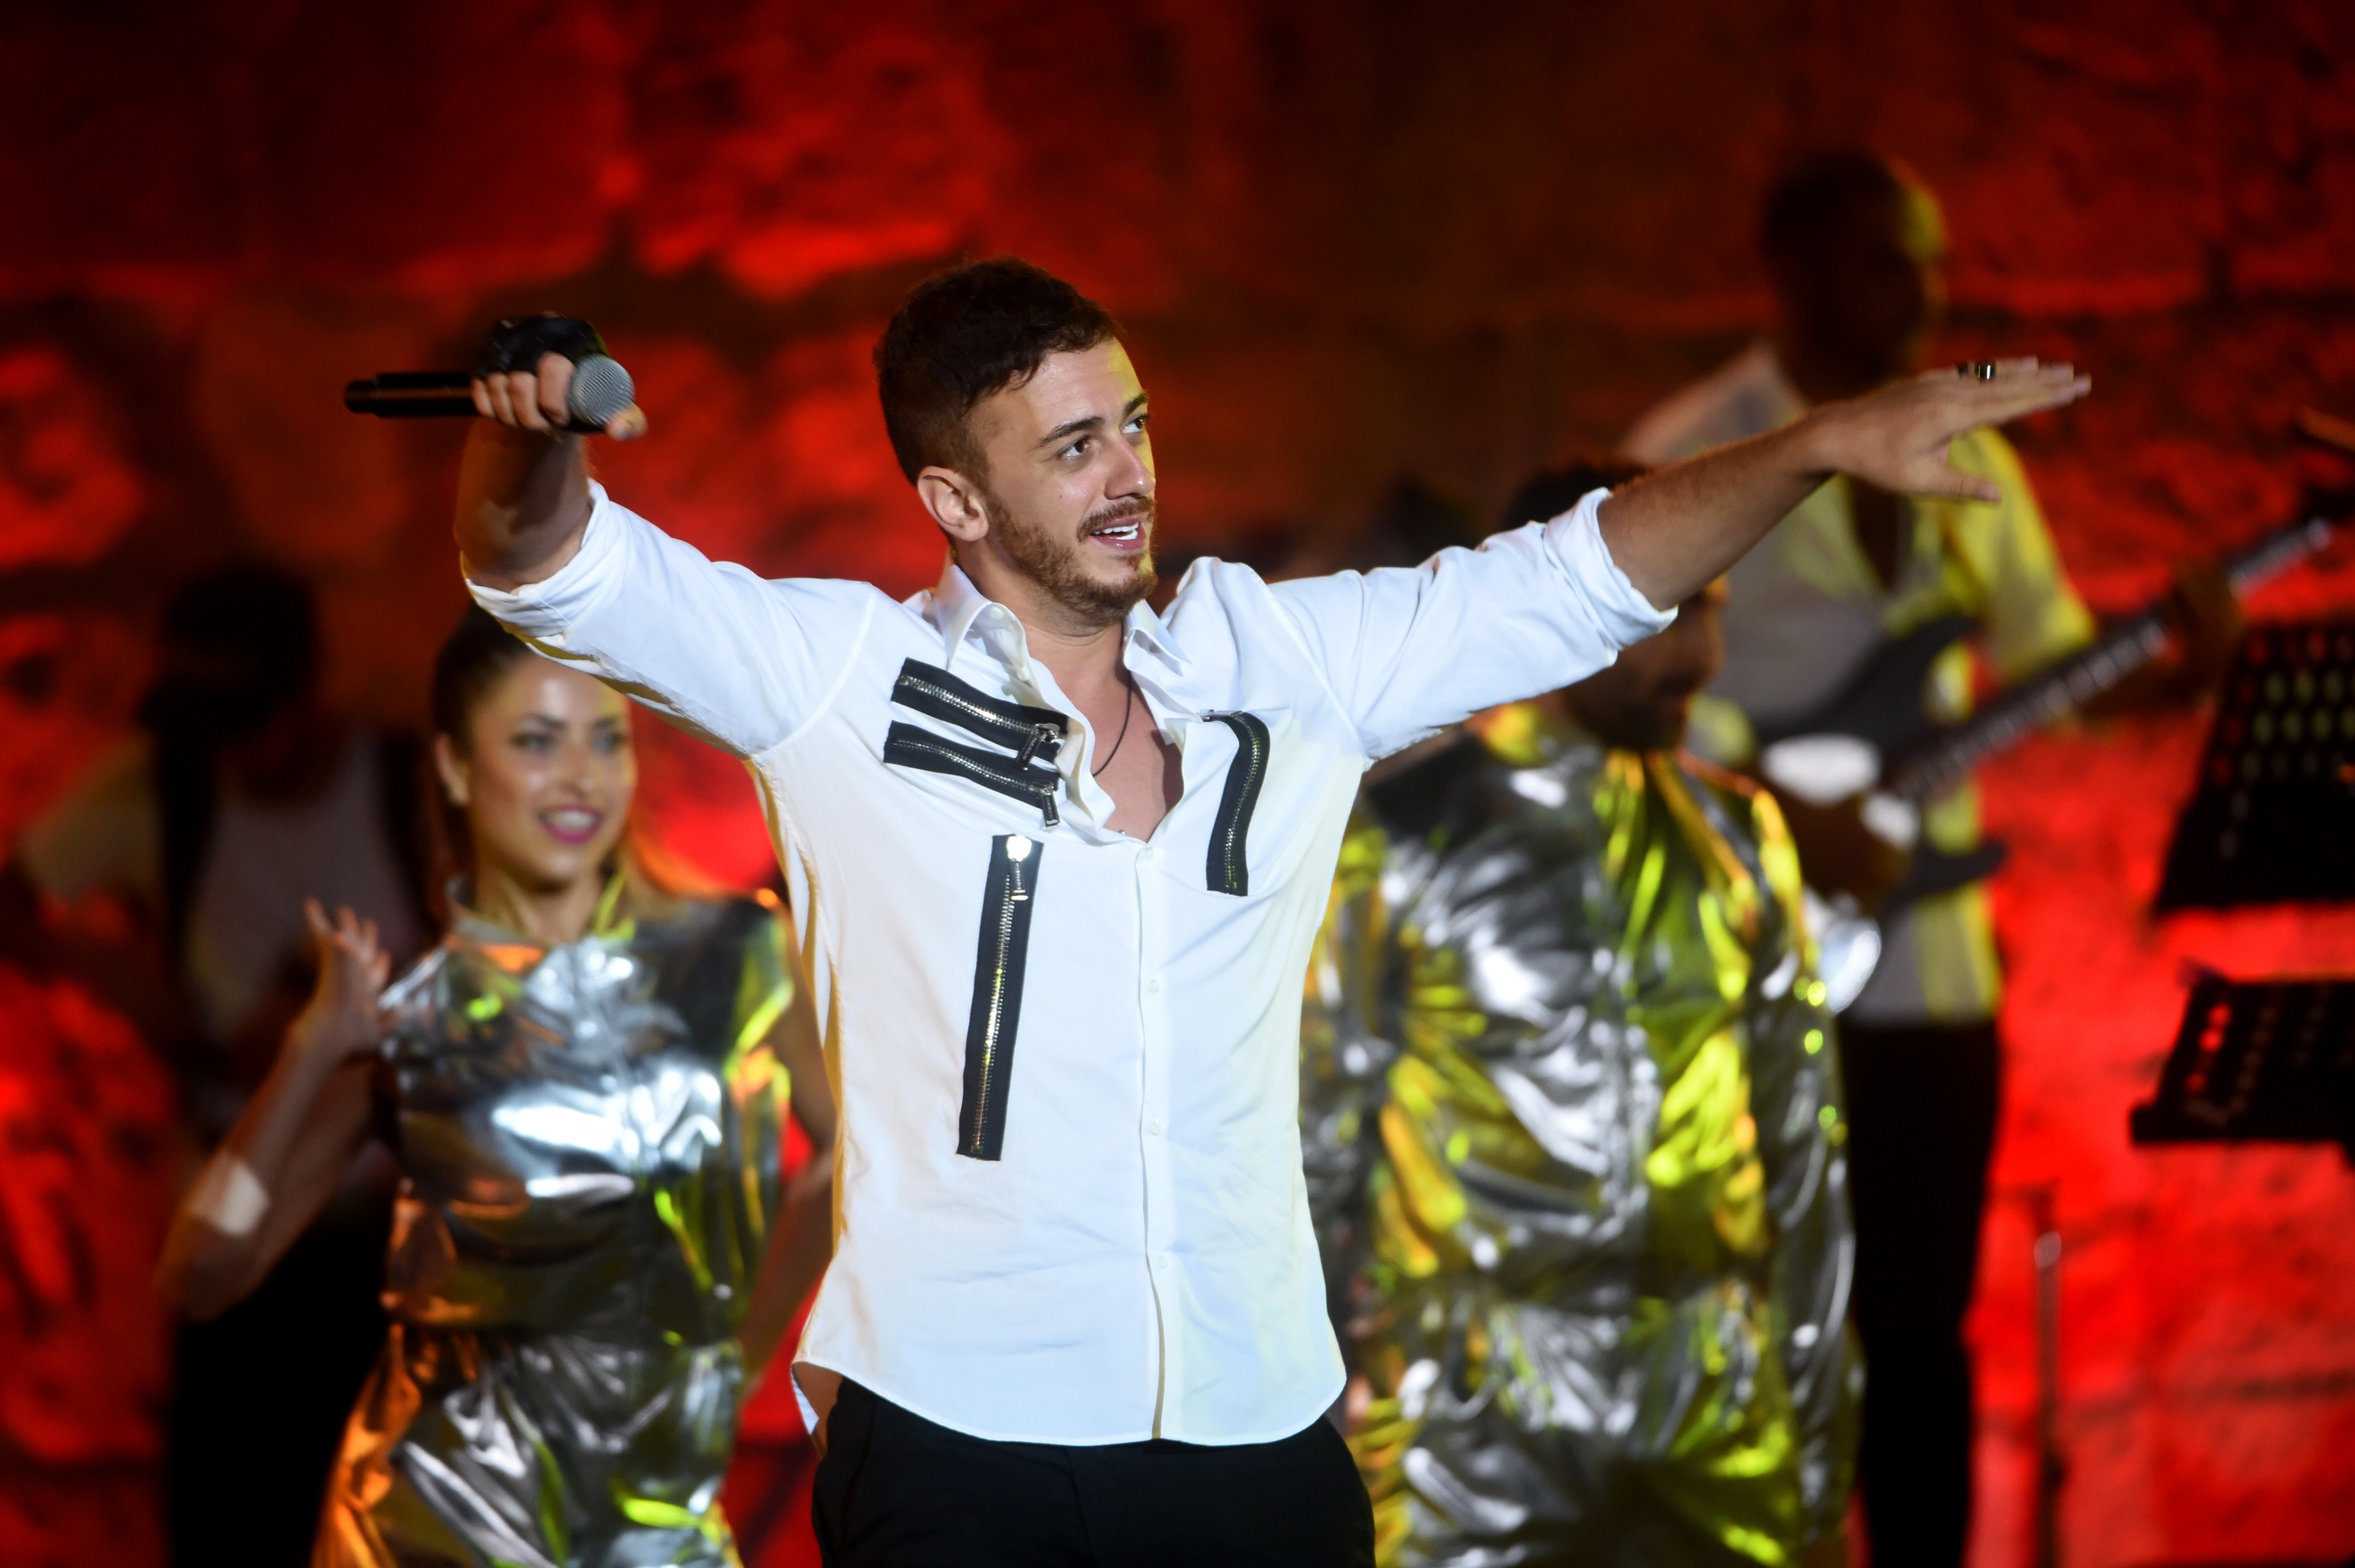 Moroccan singer Saad Lamjarred's planned performance sparked a backlash